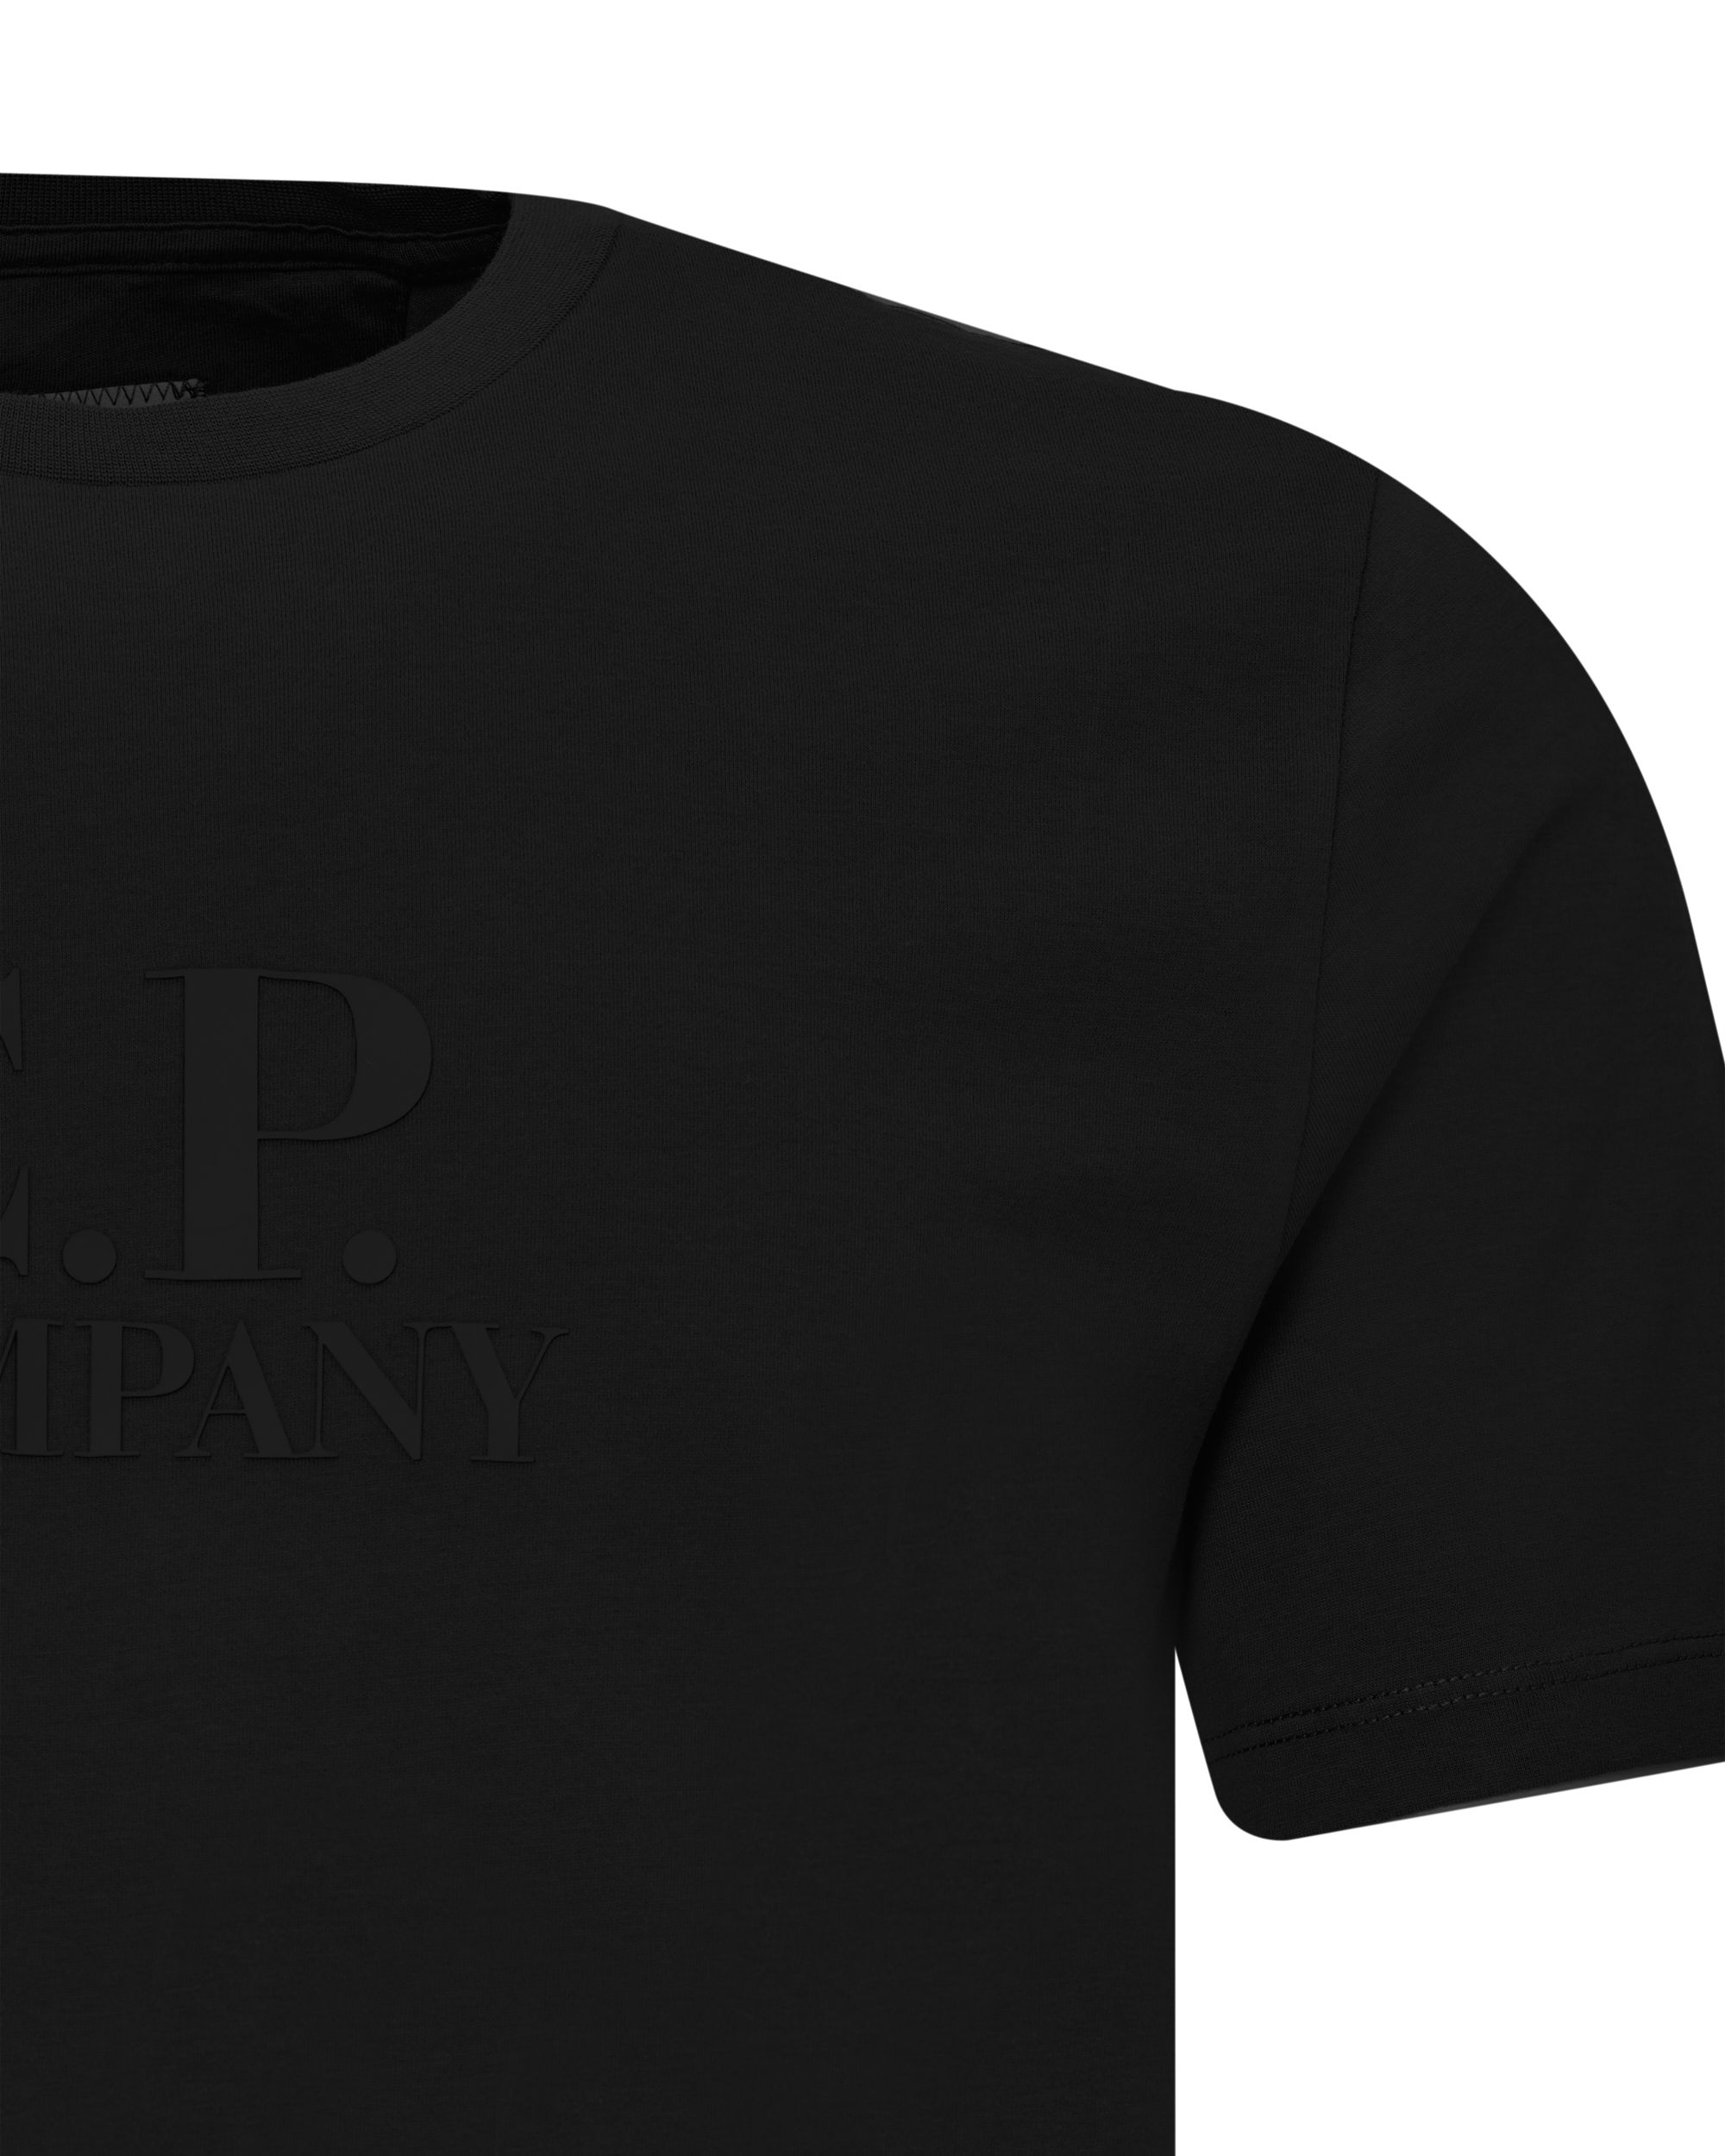 C.P Company T-shirt KM Zwart 078718-001-L